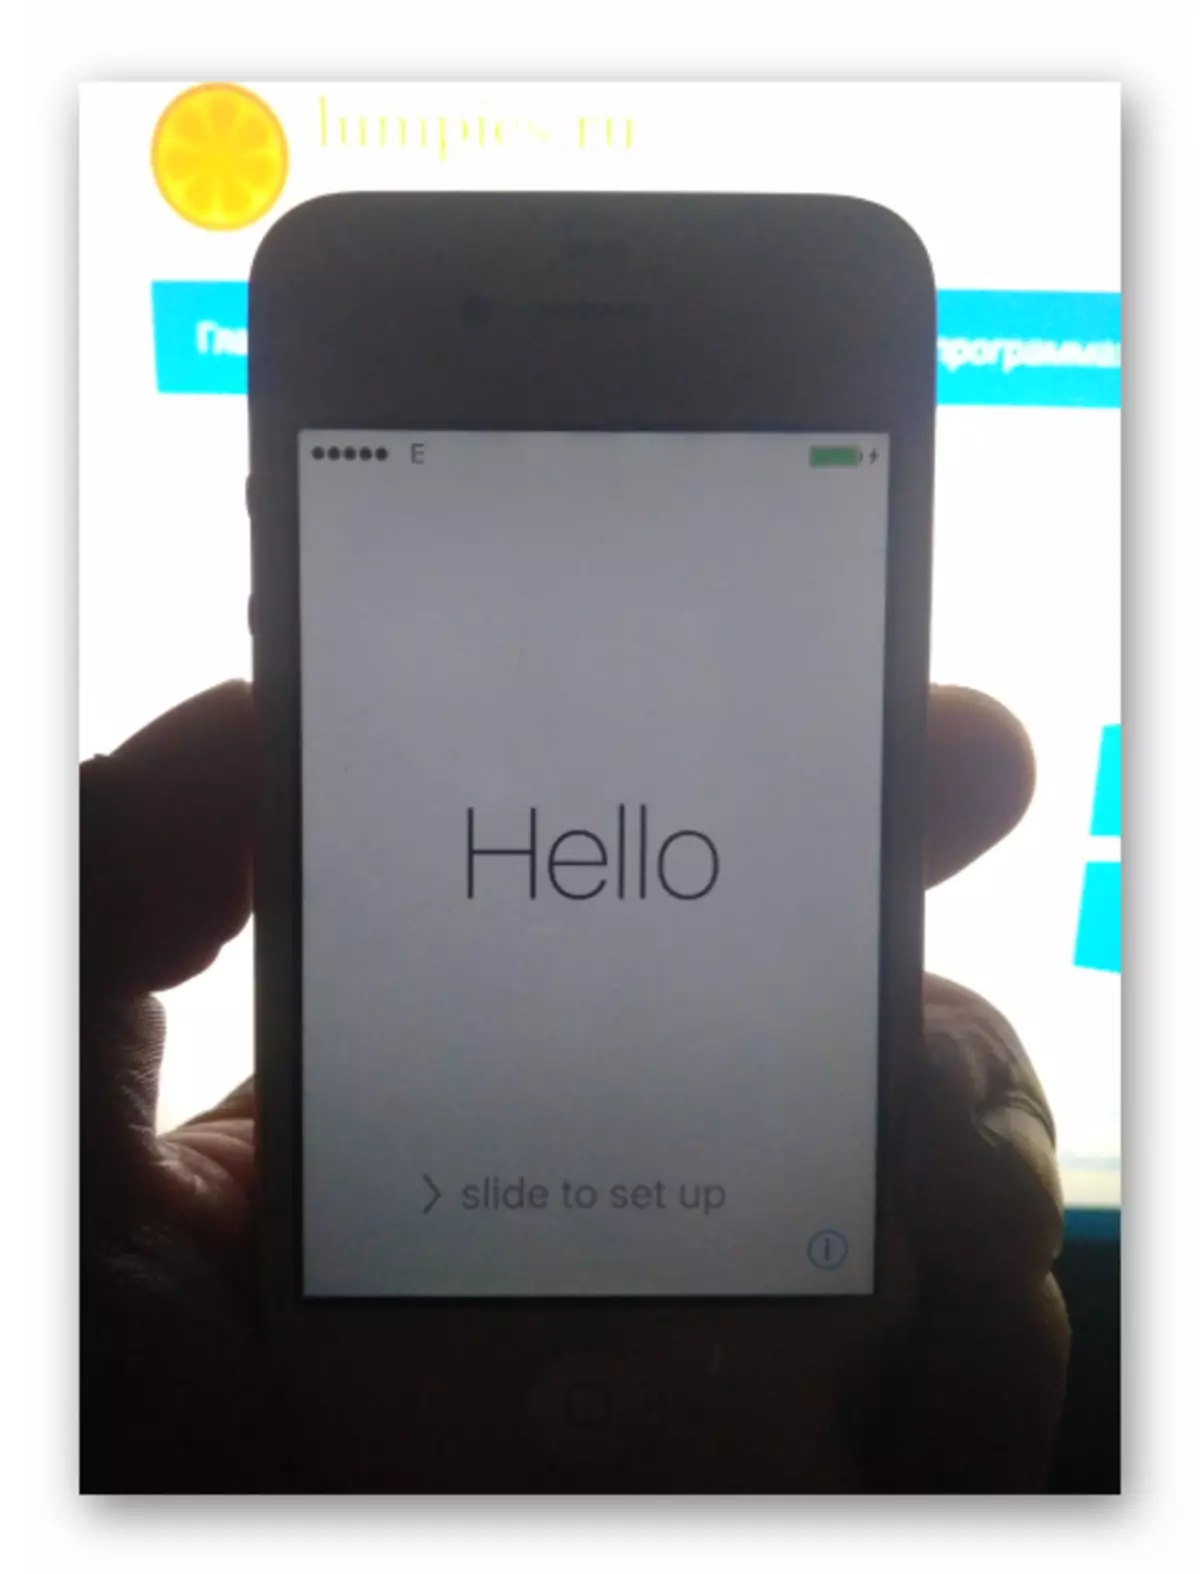 Apple iPhone 4S iOS-ті қолданбаған IOS-ті ITunes арқылы қолданбағаннан кейін